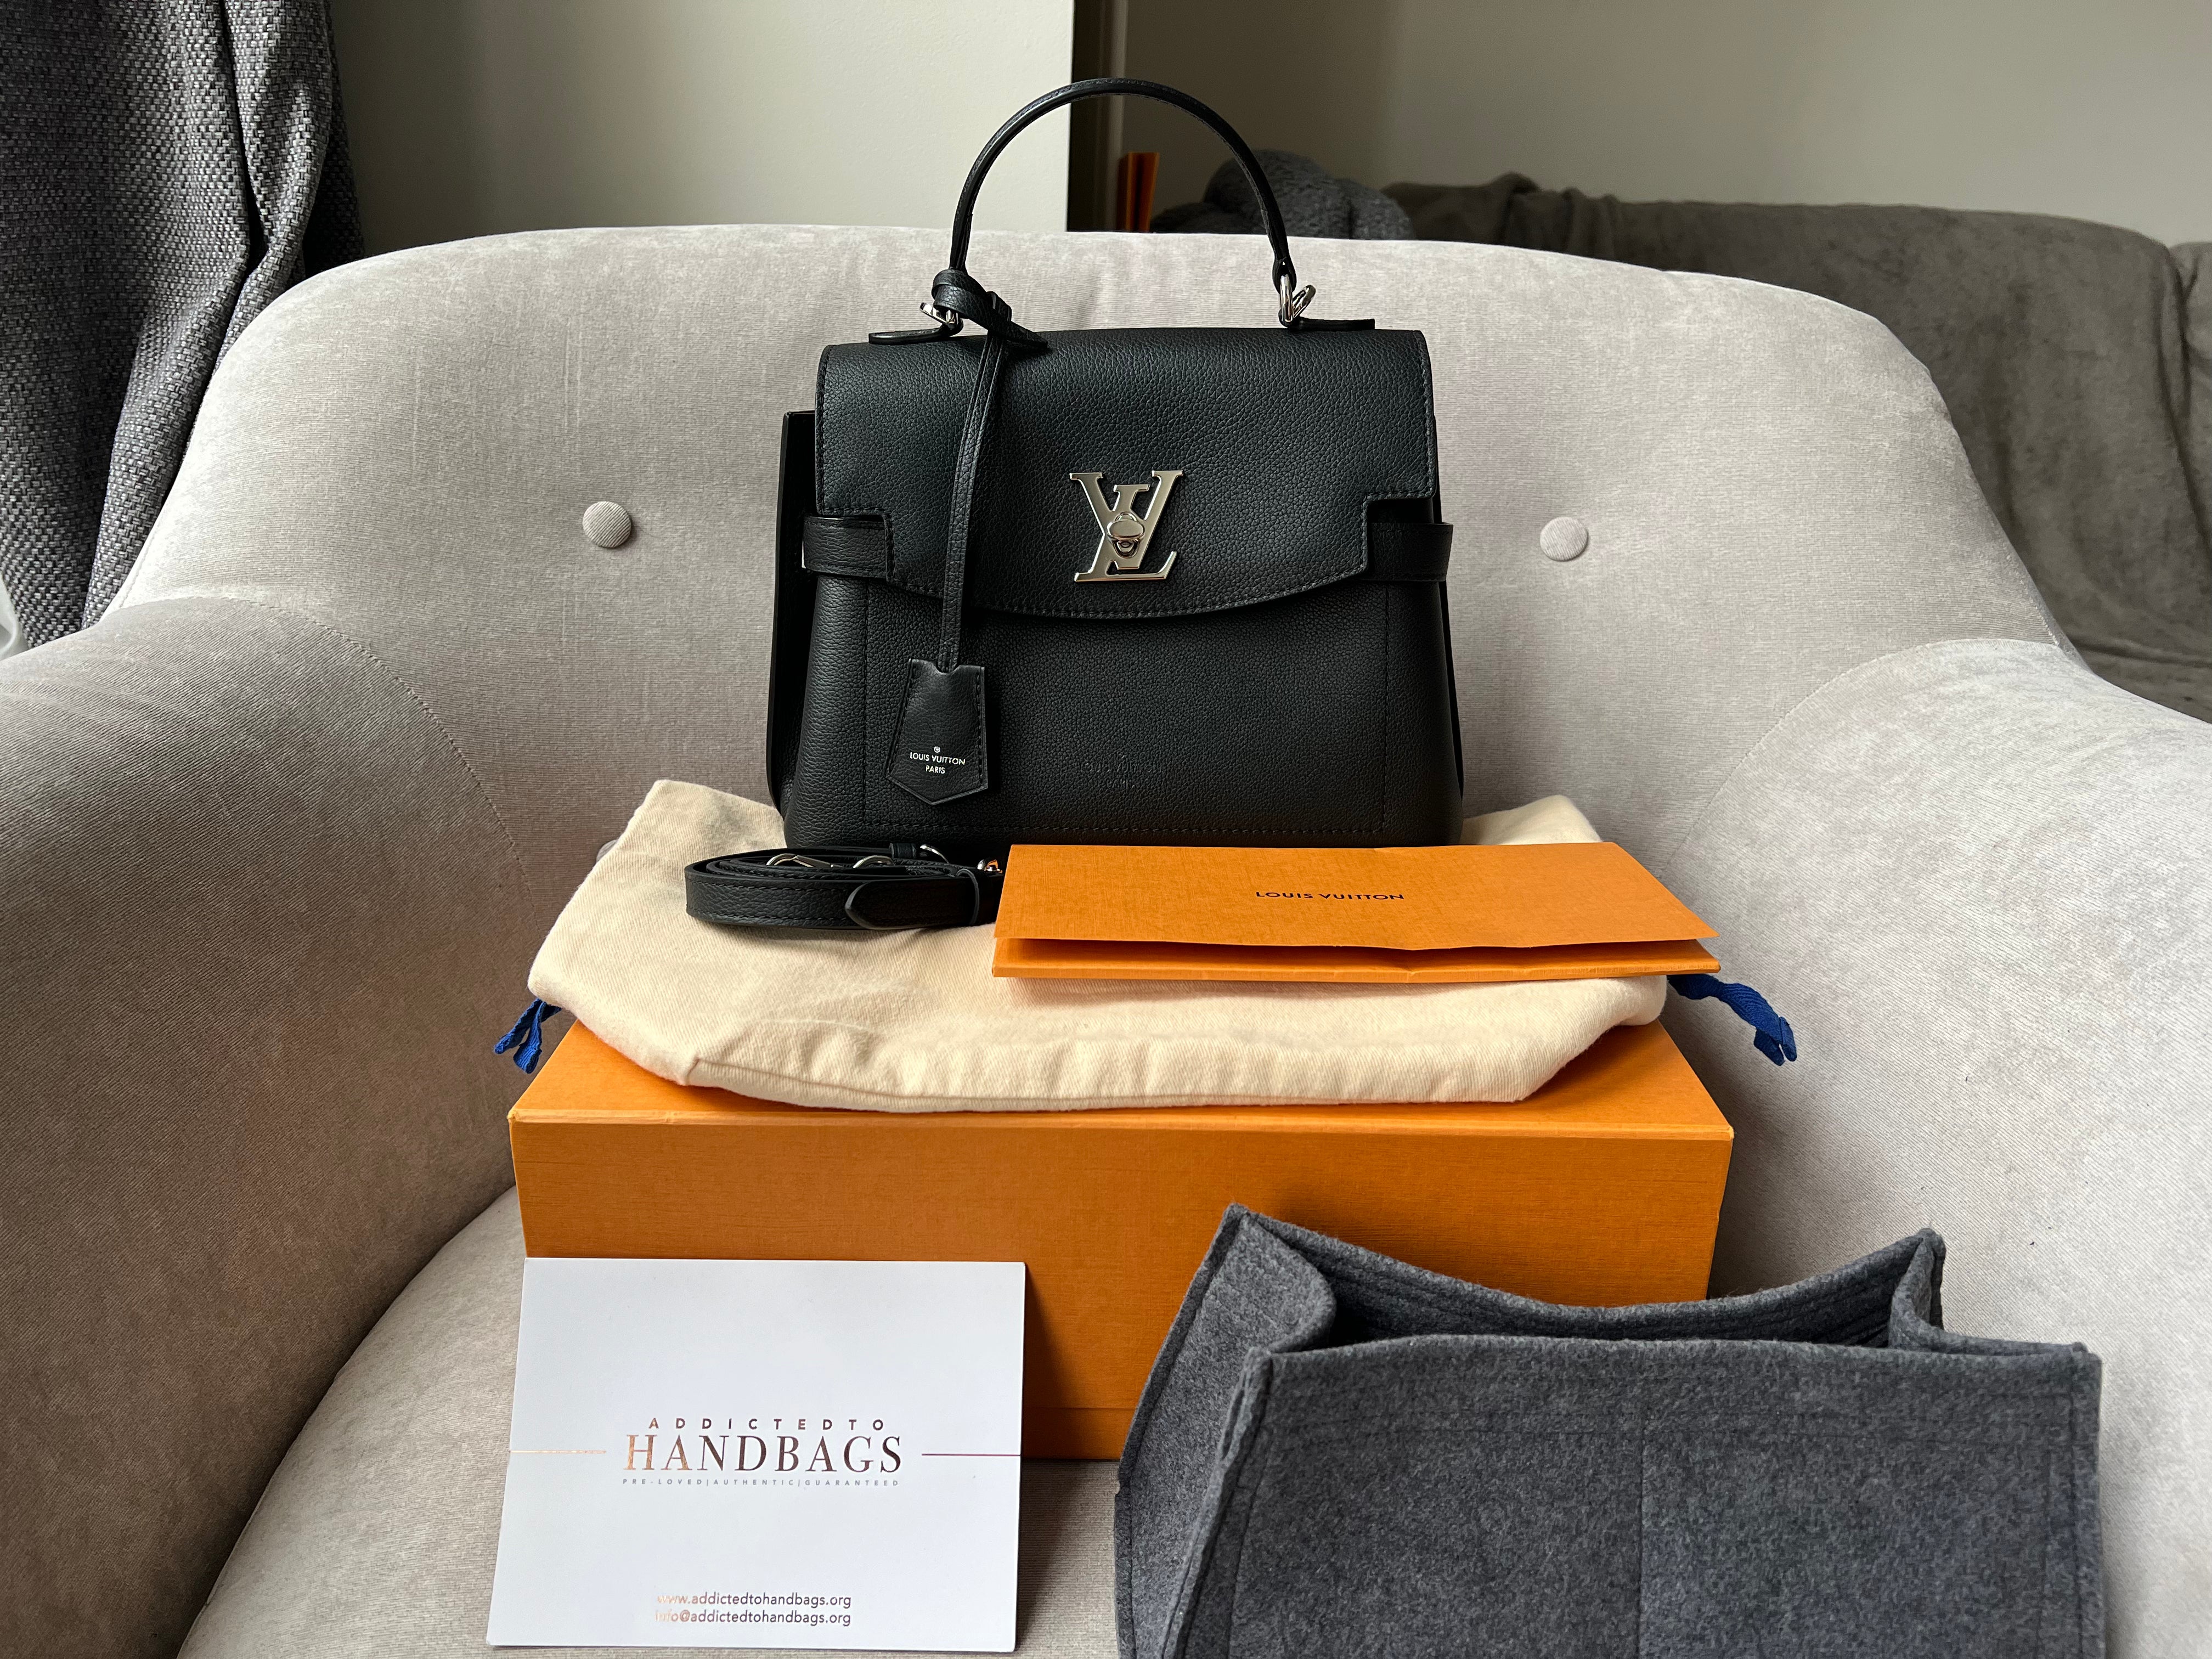 Louis Vuitton Neo Noe Epi galet grey new handbag full set, box, receipt